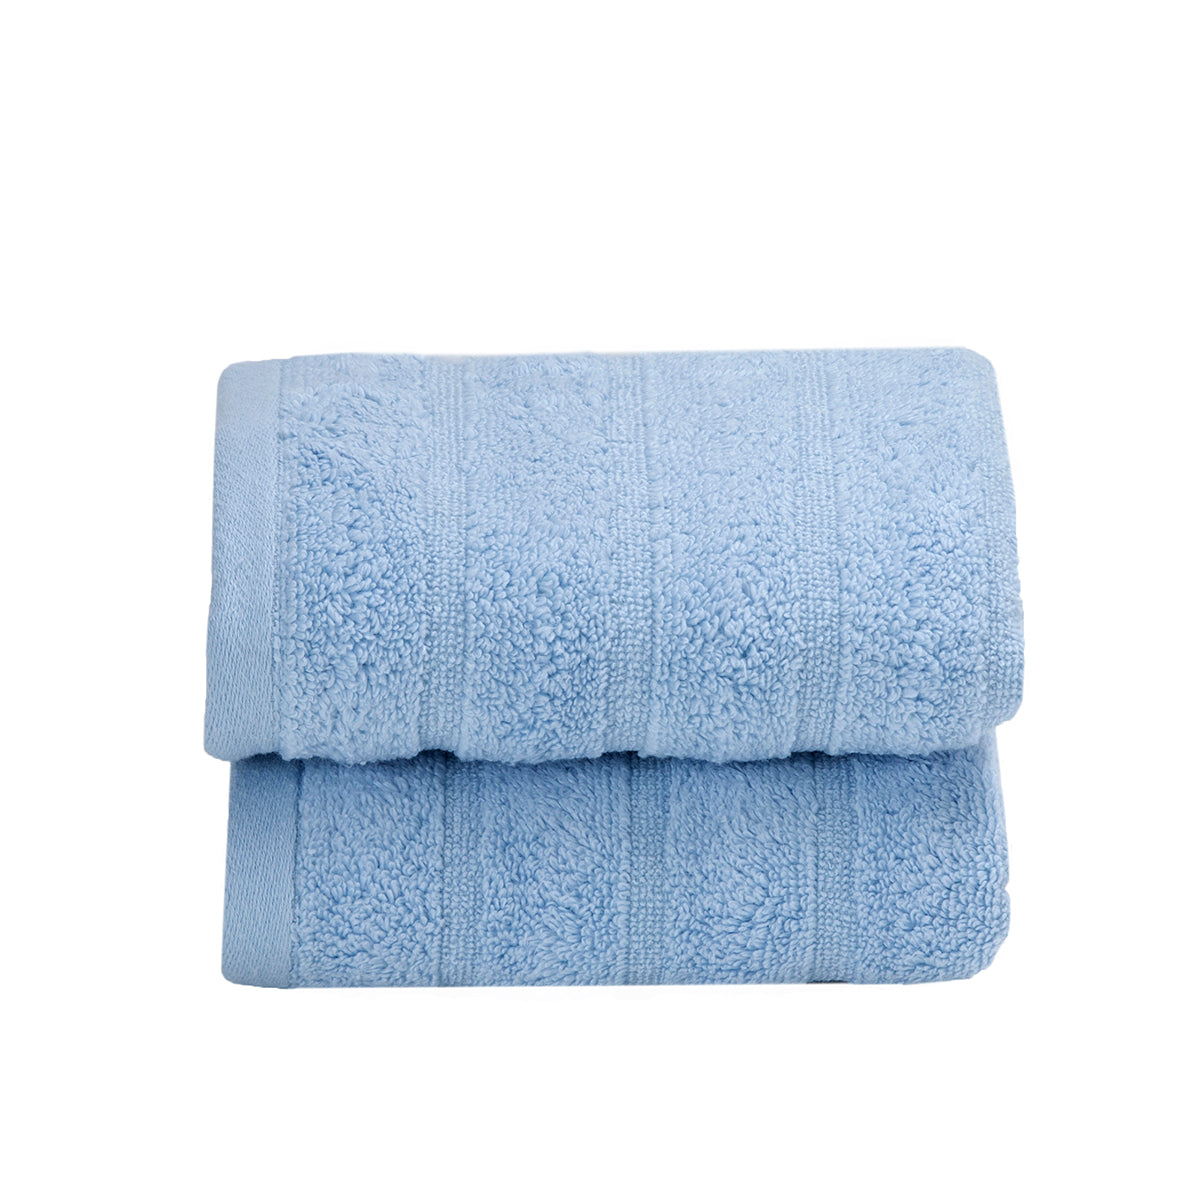 Casper Antimicrobial Antifungal Super Absorbent & Lofty Baby Blue Towel Set